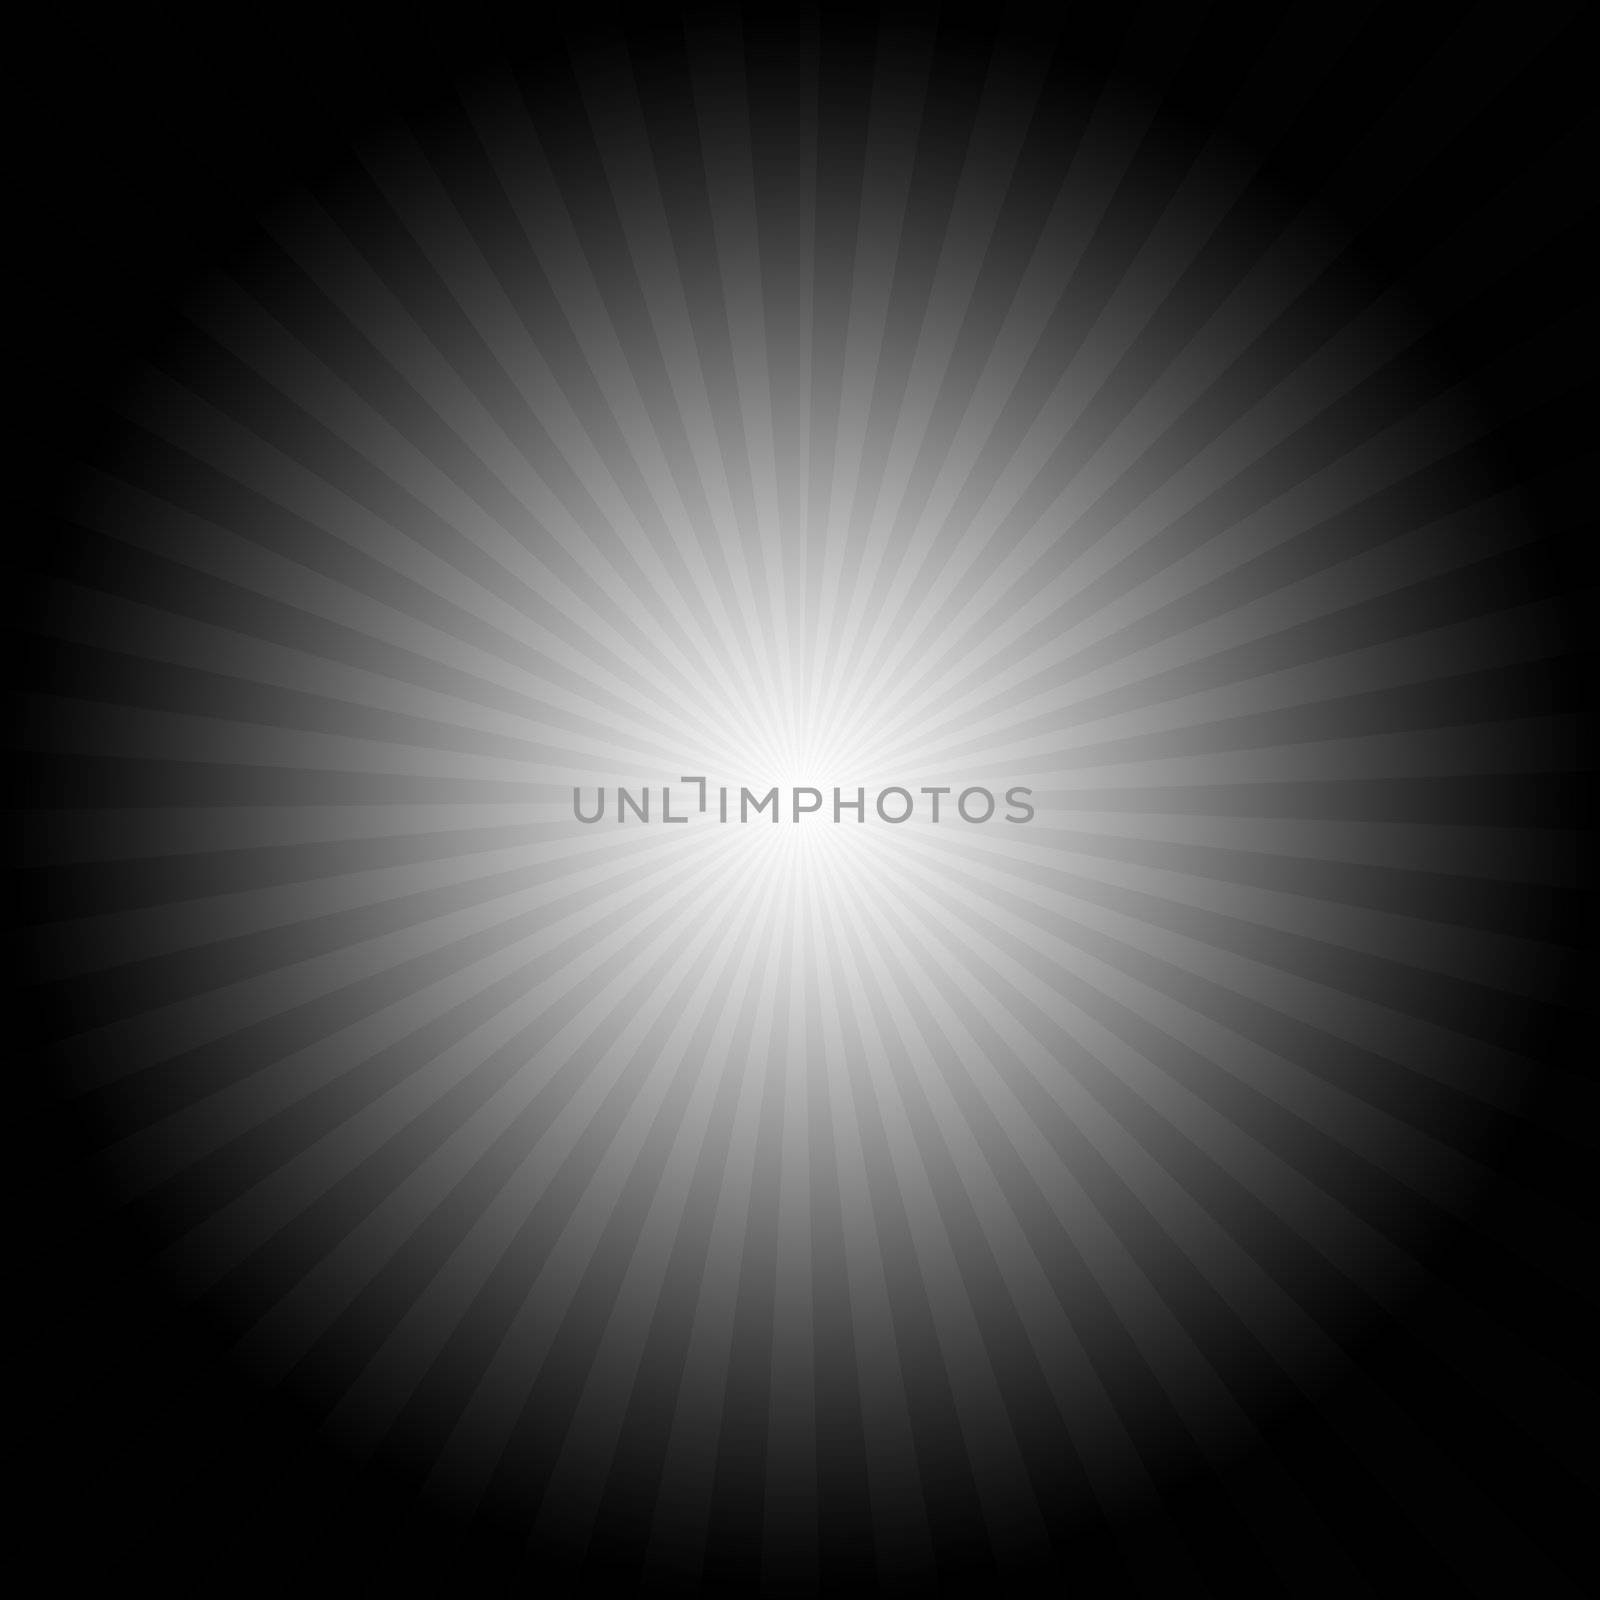 A black and white vector sunburst file